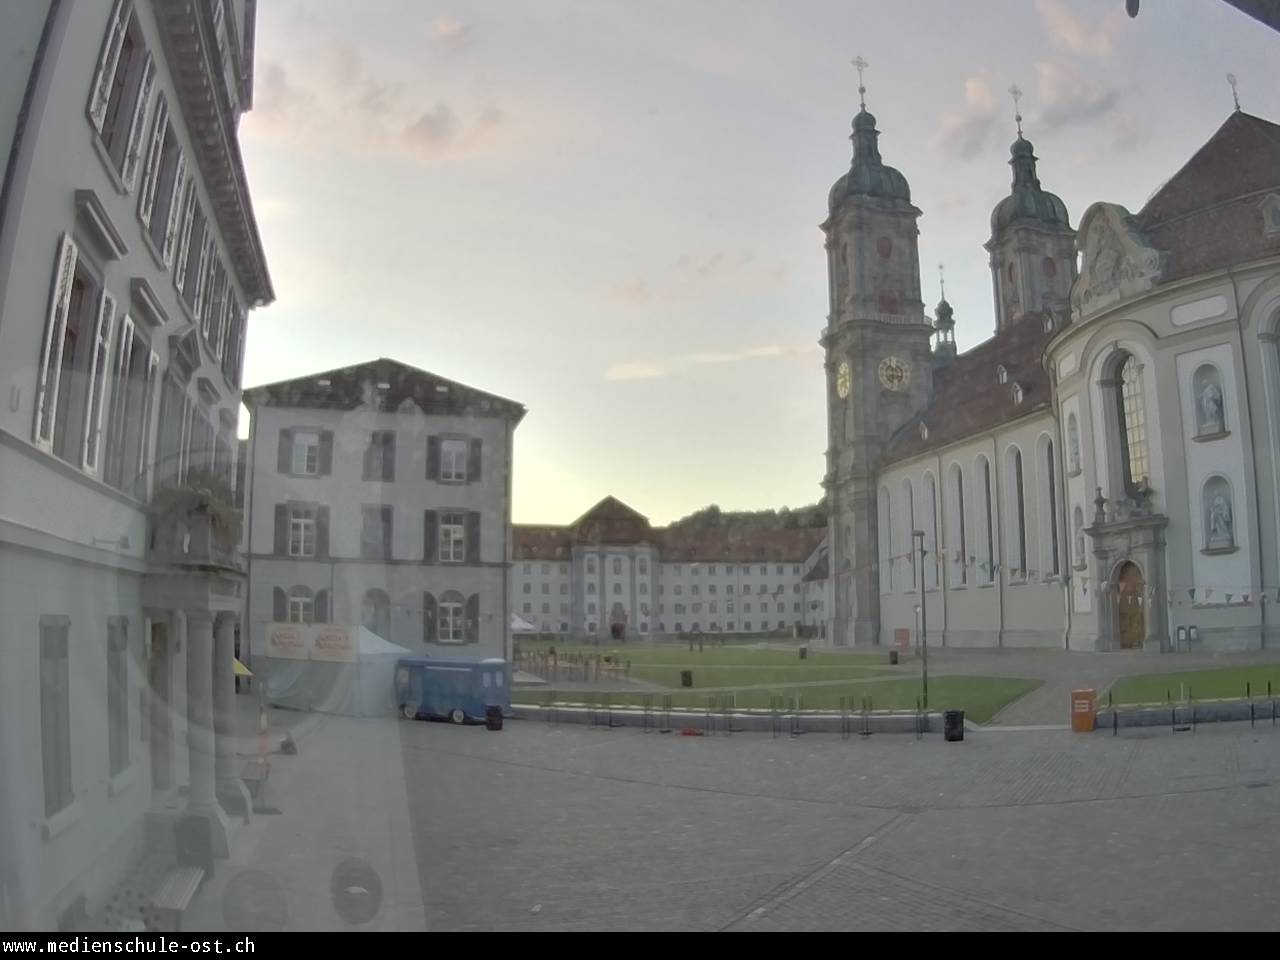 St. Gallen Tor. 05:46